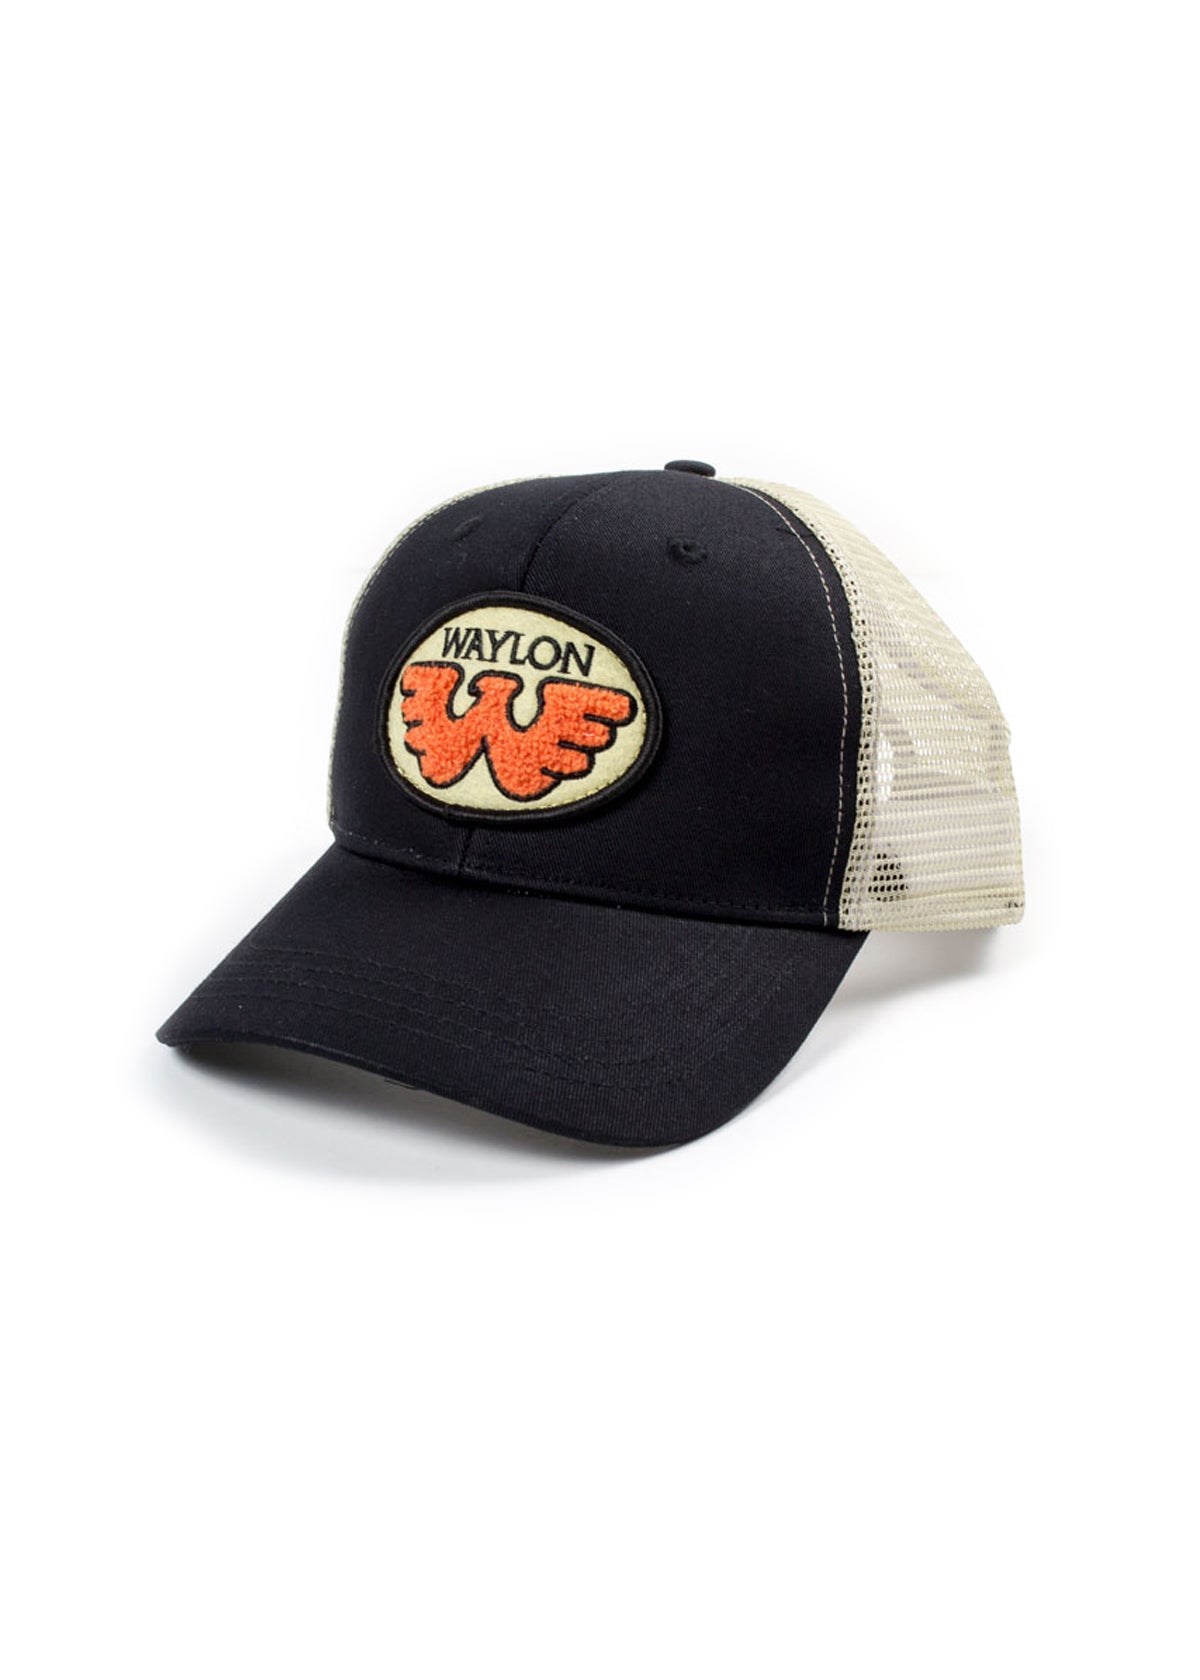 Flying W Patched Waylon Jennings Trucker Hat– Waylon Jennings